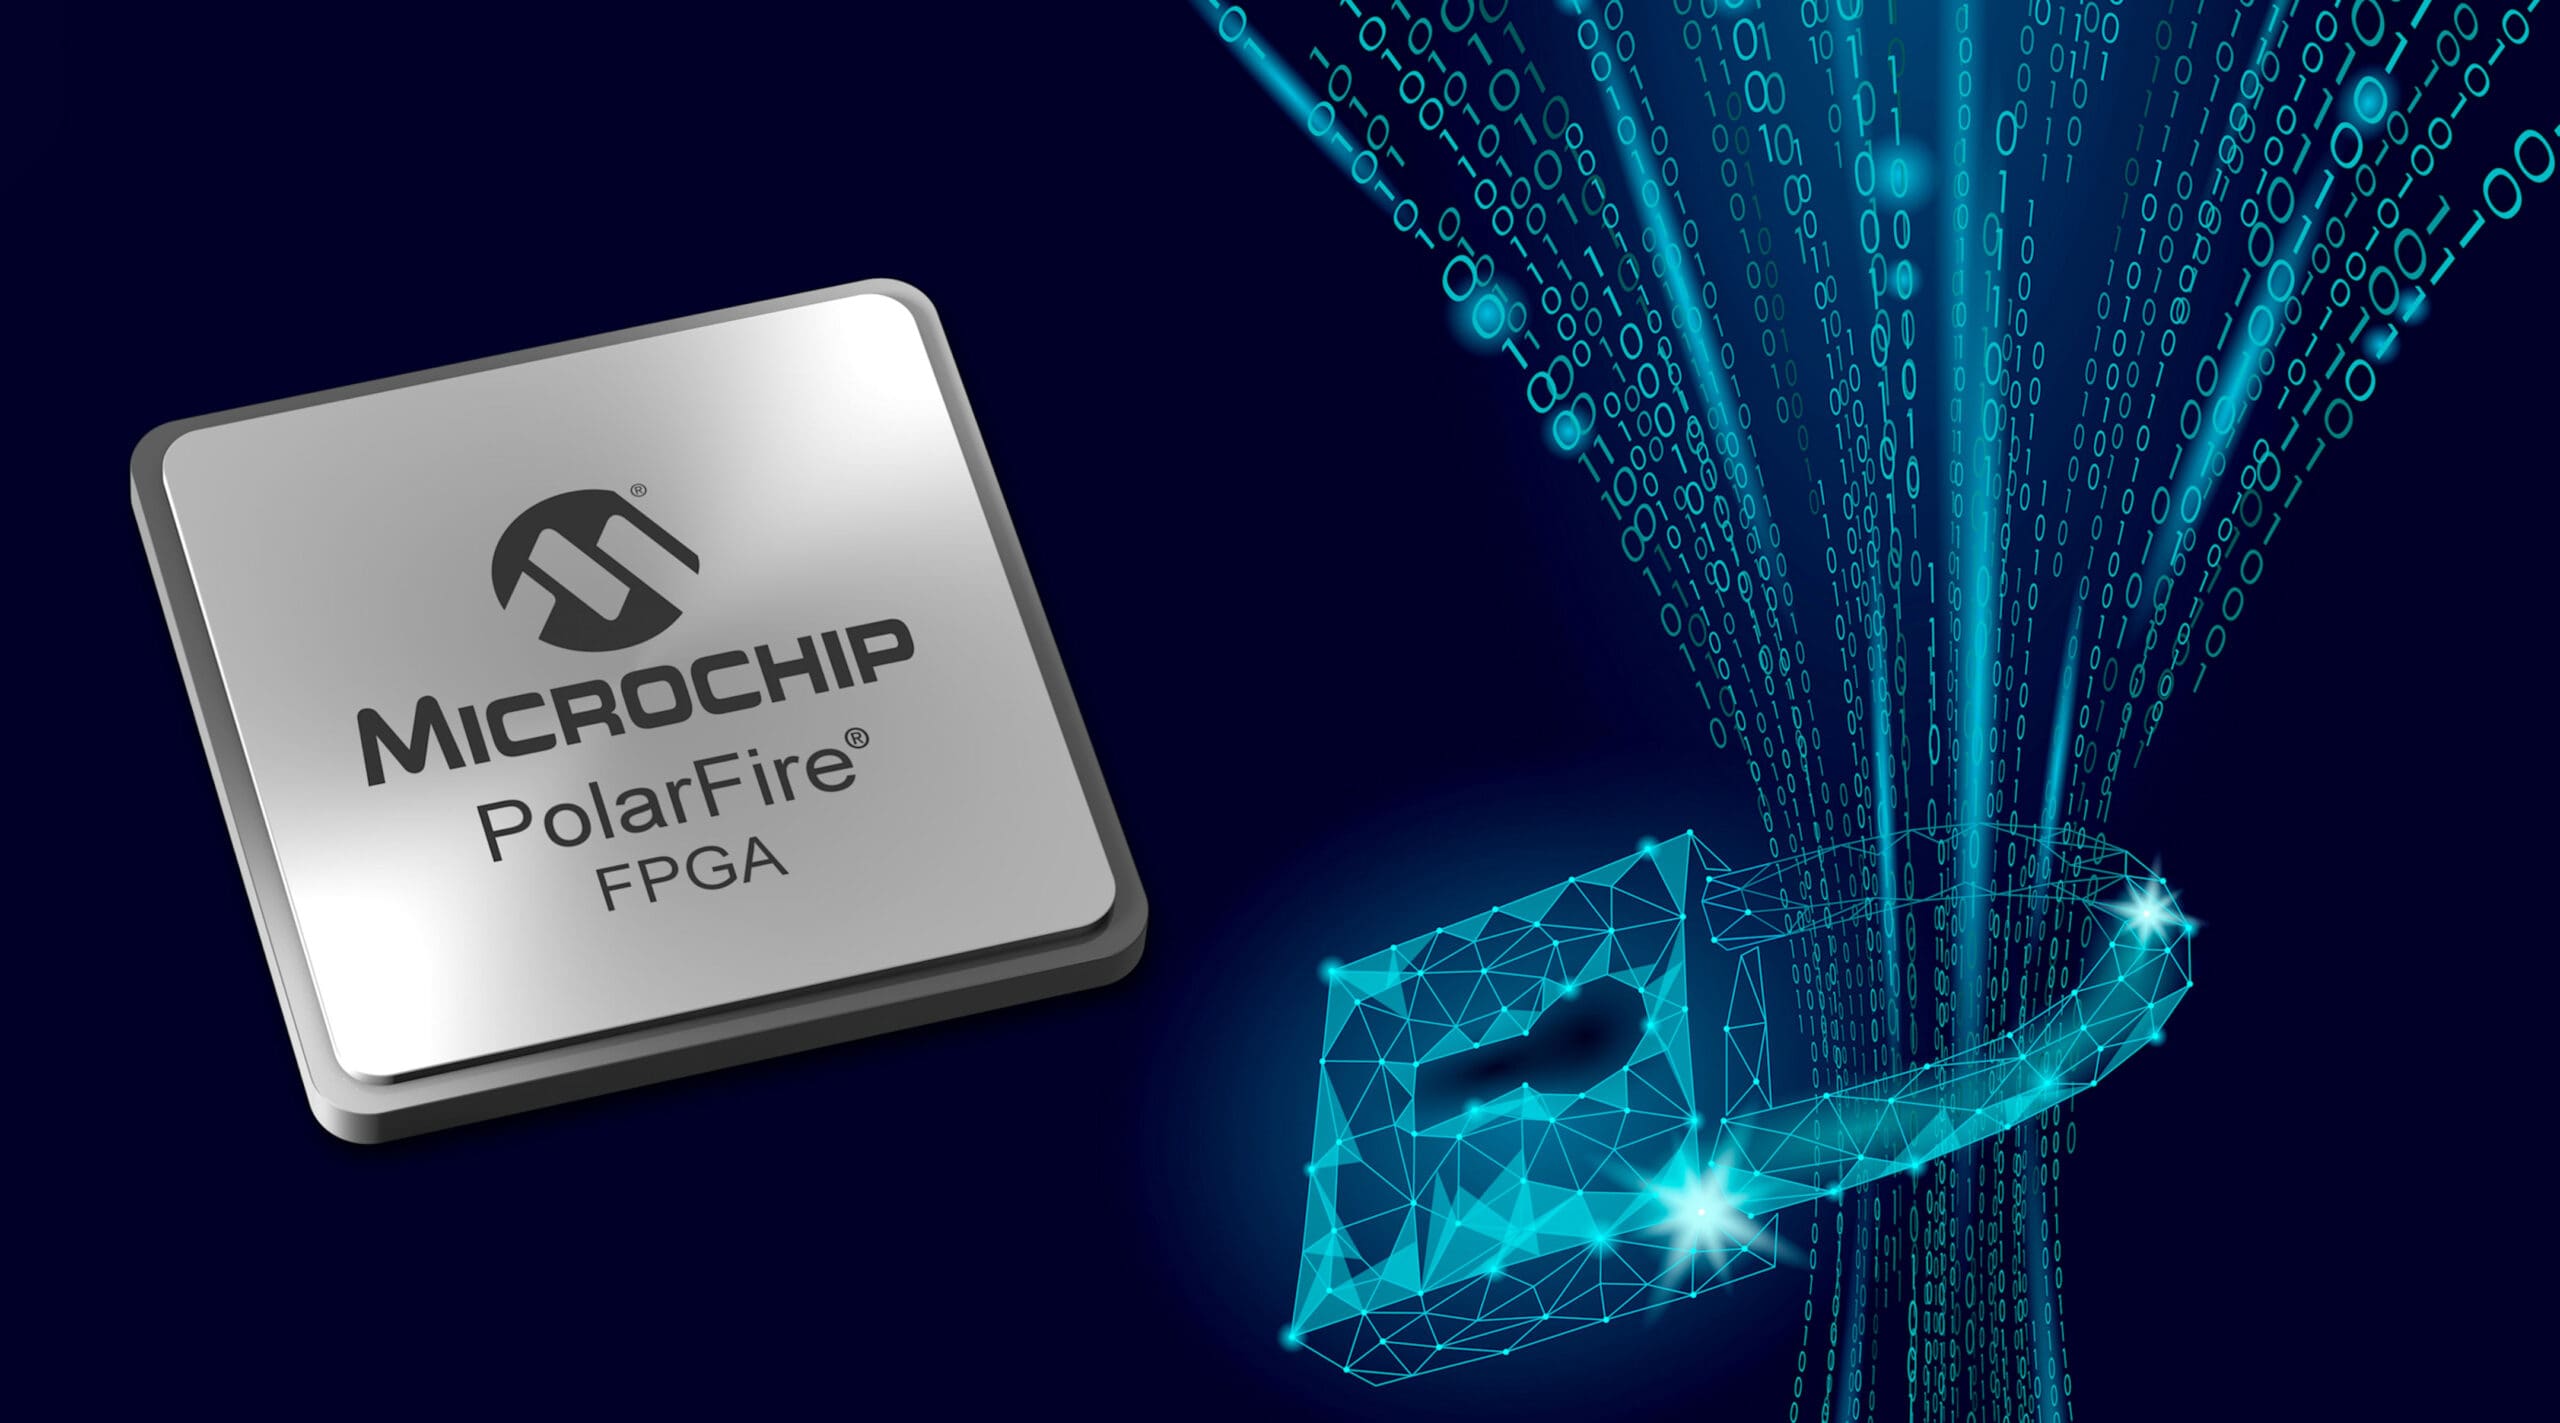 seguridad fpga polarfire microchip